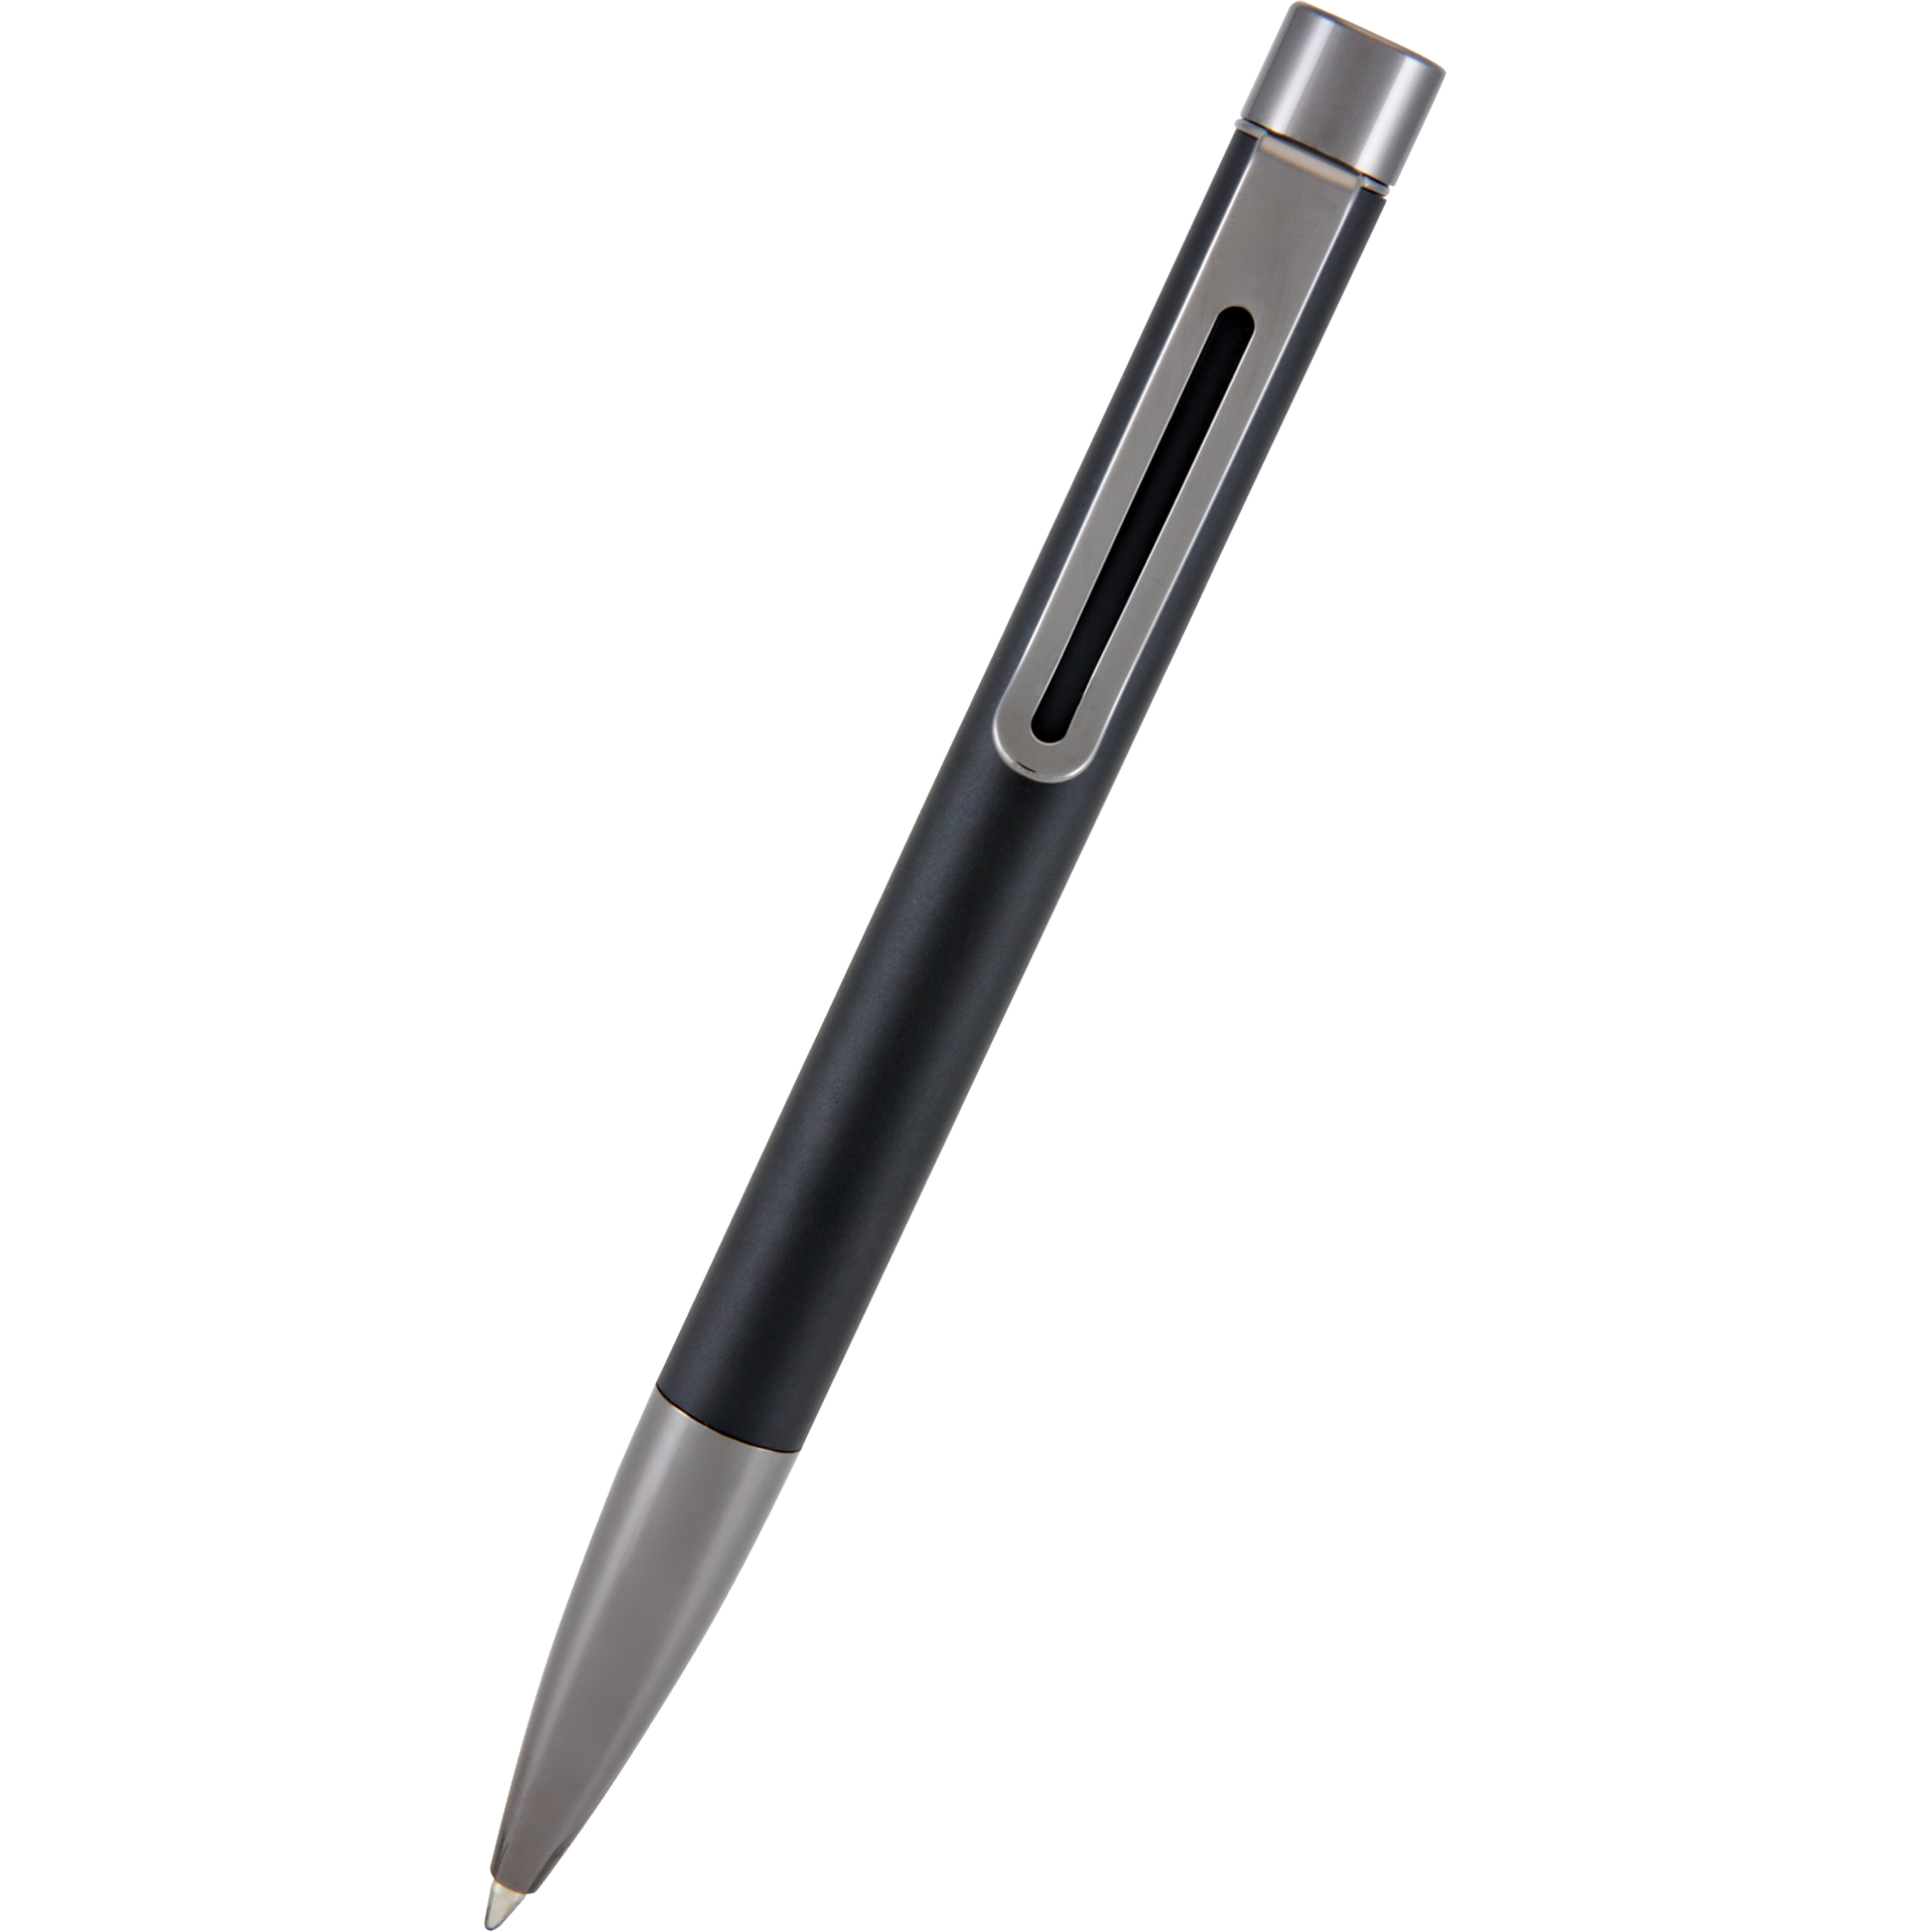 Monteverde Ritma Ballpoint Pen - Black-Pen Boutique Ltd